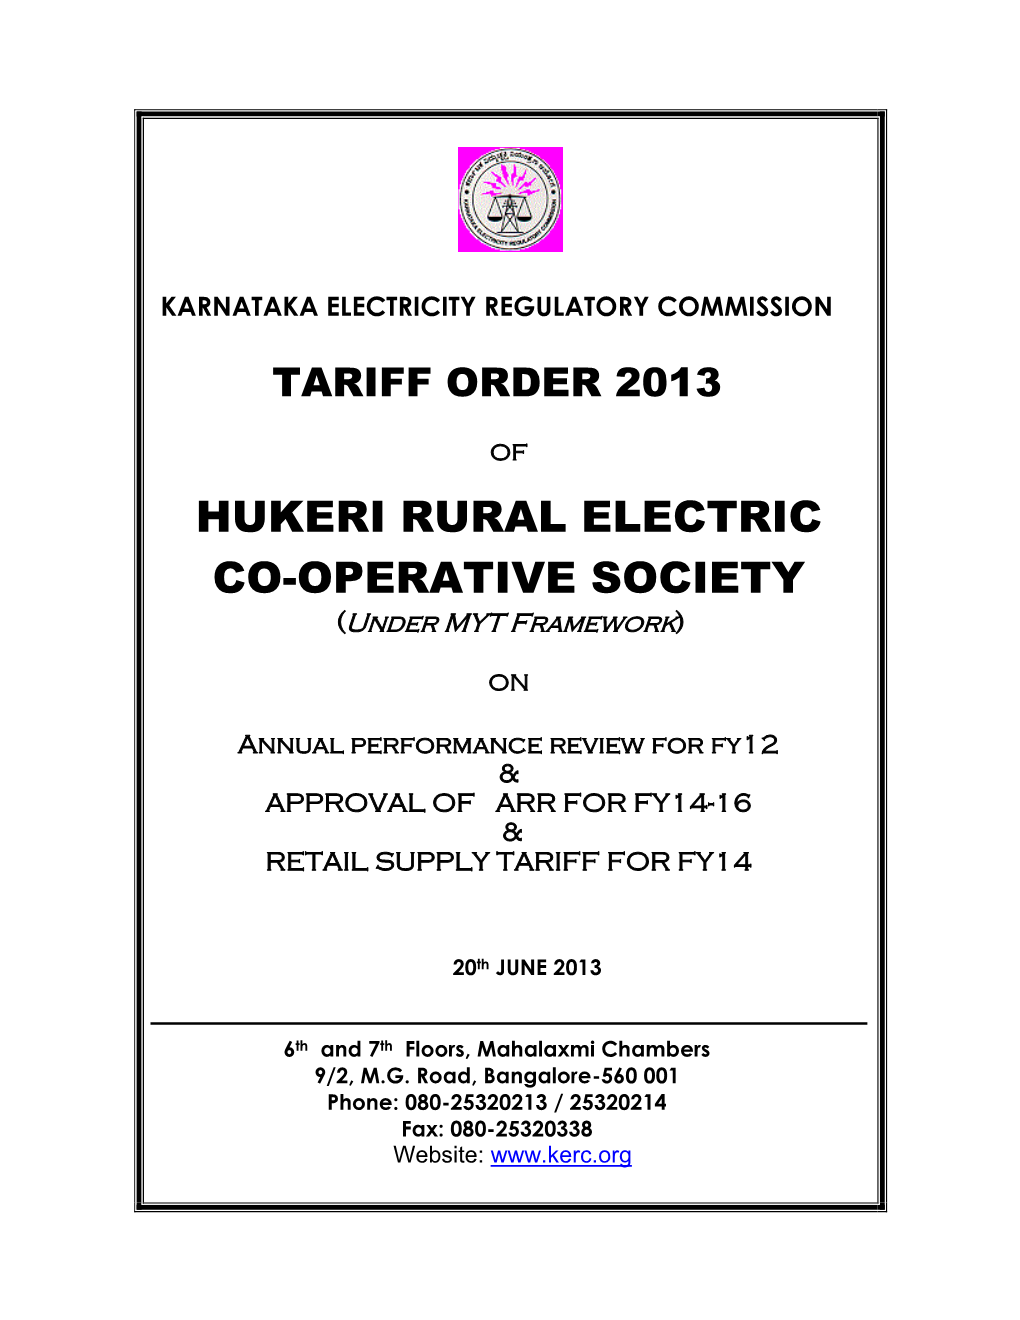 HUKERI RURAL ELECTRIC CO-OPERATIVE SOCIETY (Under MYT Framework)